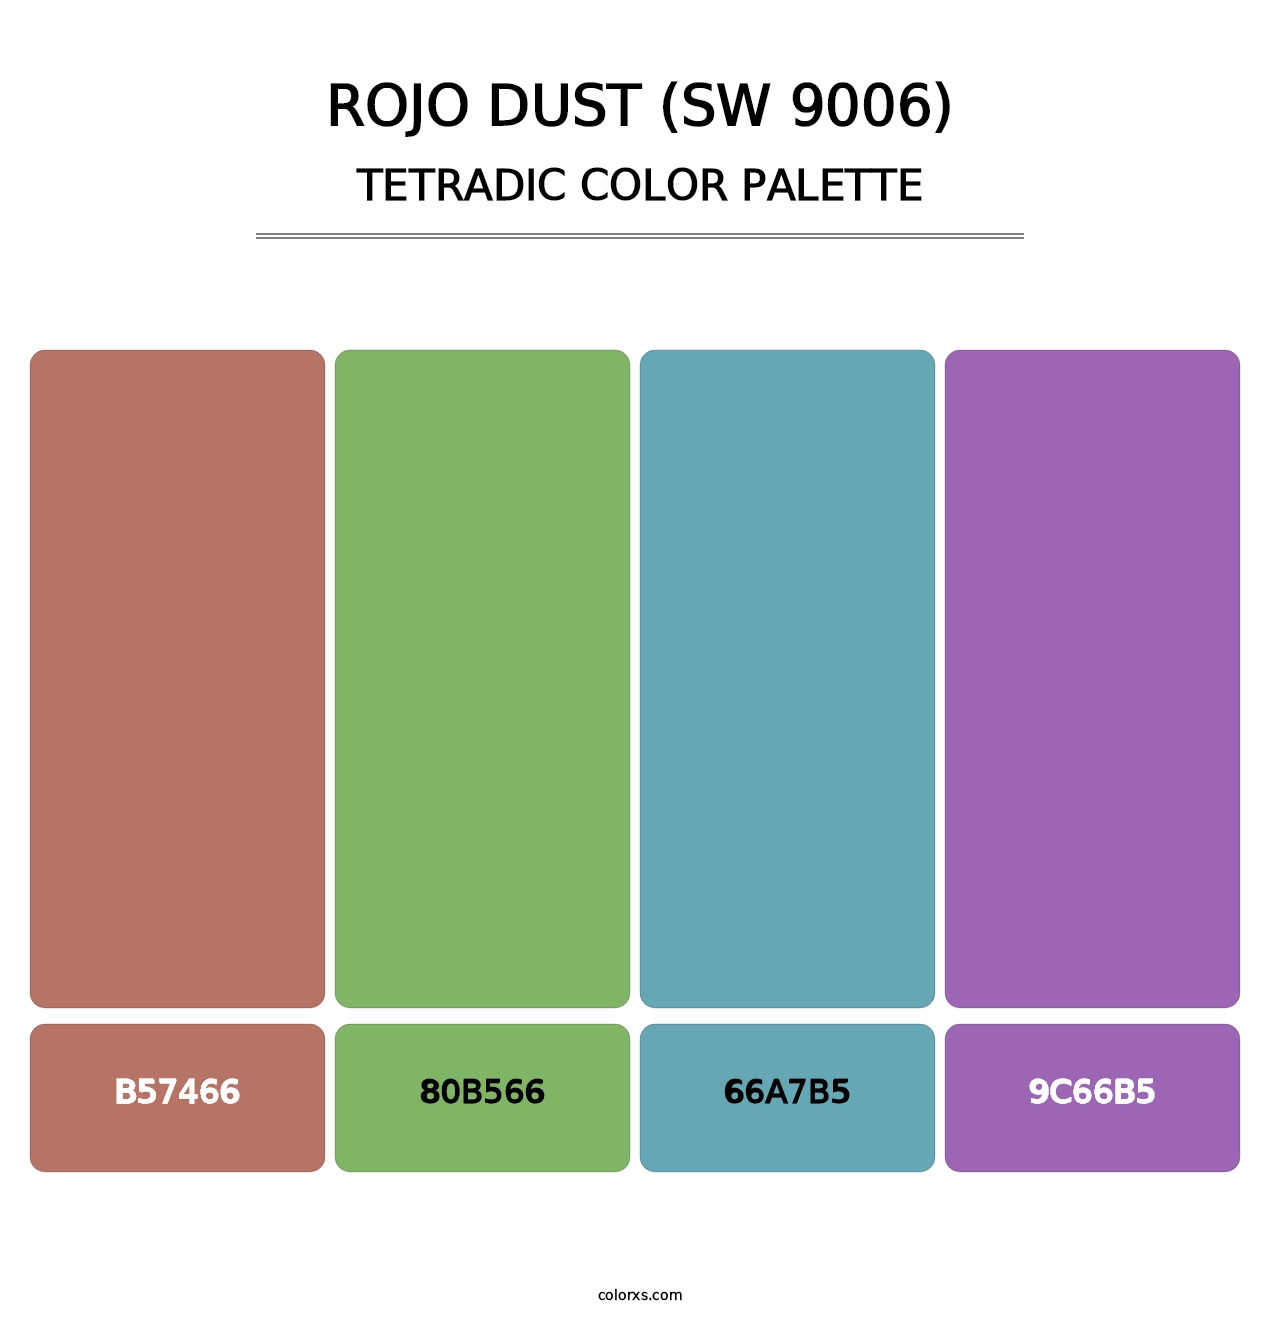 Rojo Dust (SW 9006) - Tetradic Color Palette